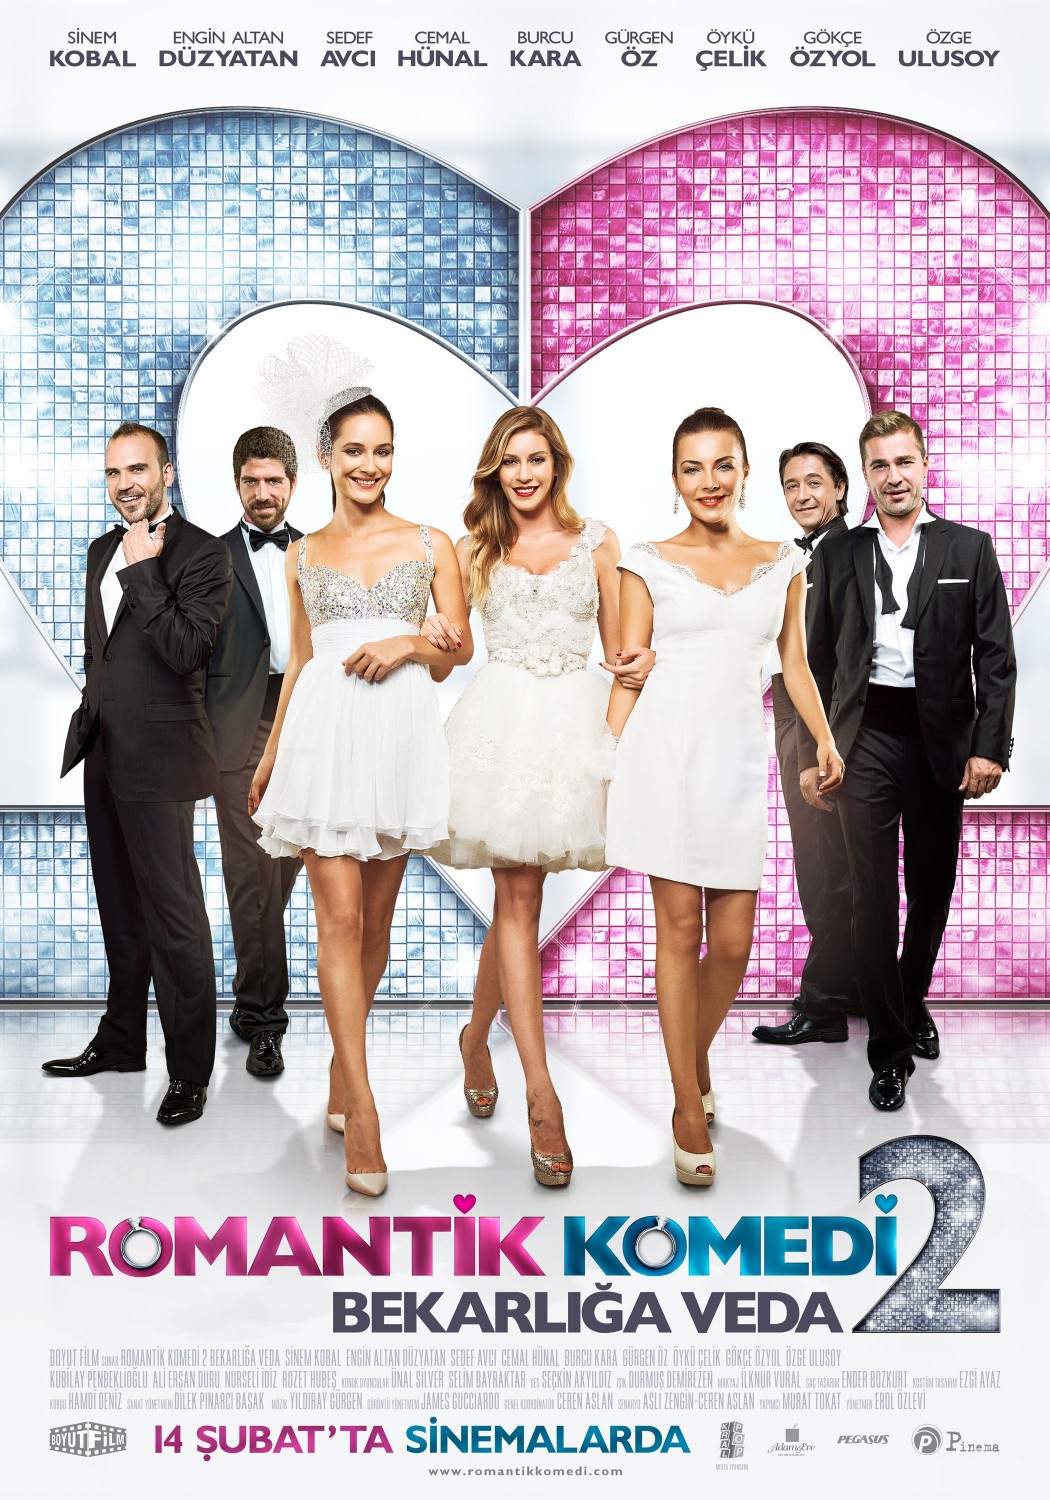 Extra Large Movie Poster Image for Romantik komedi 2: Bekarliga veda (#1 of 9)